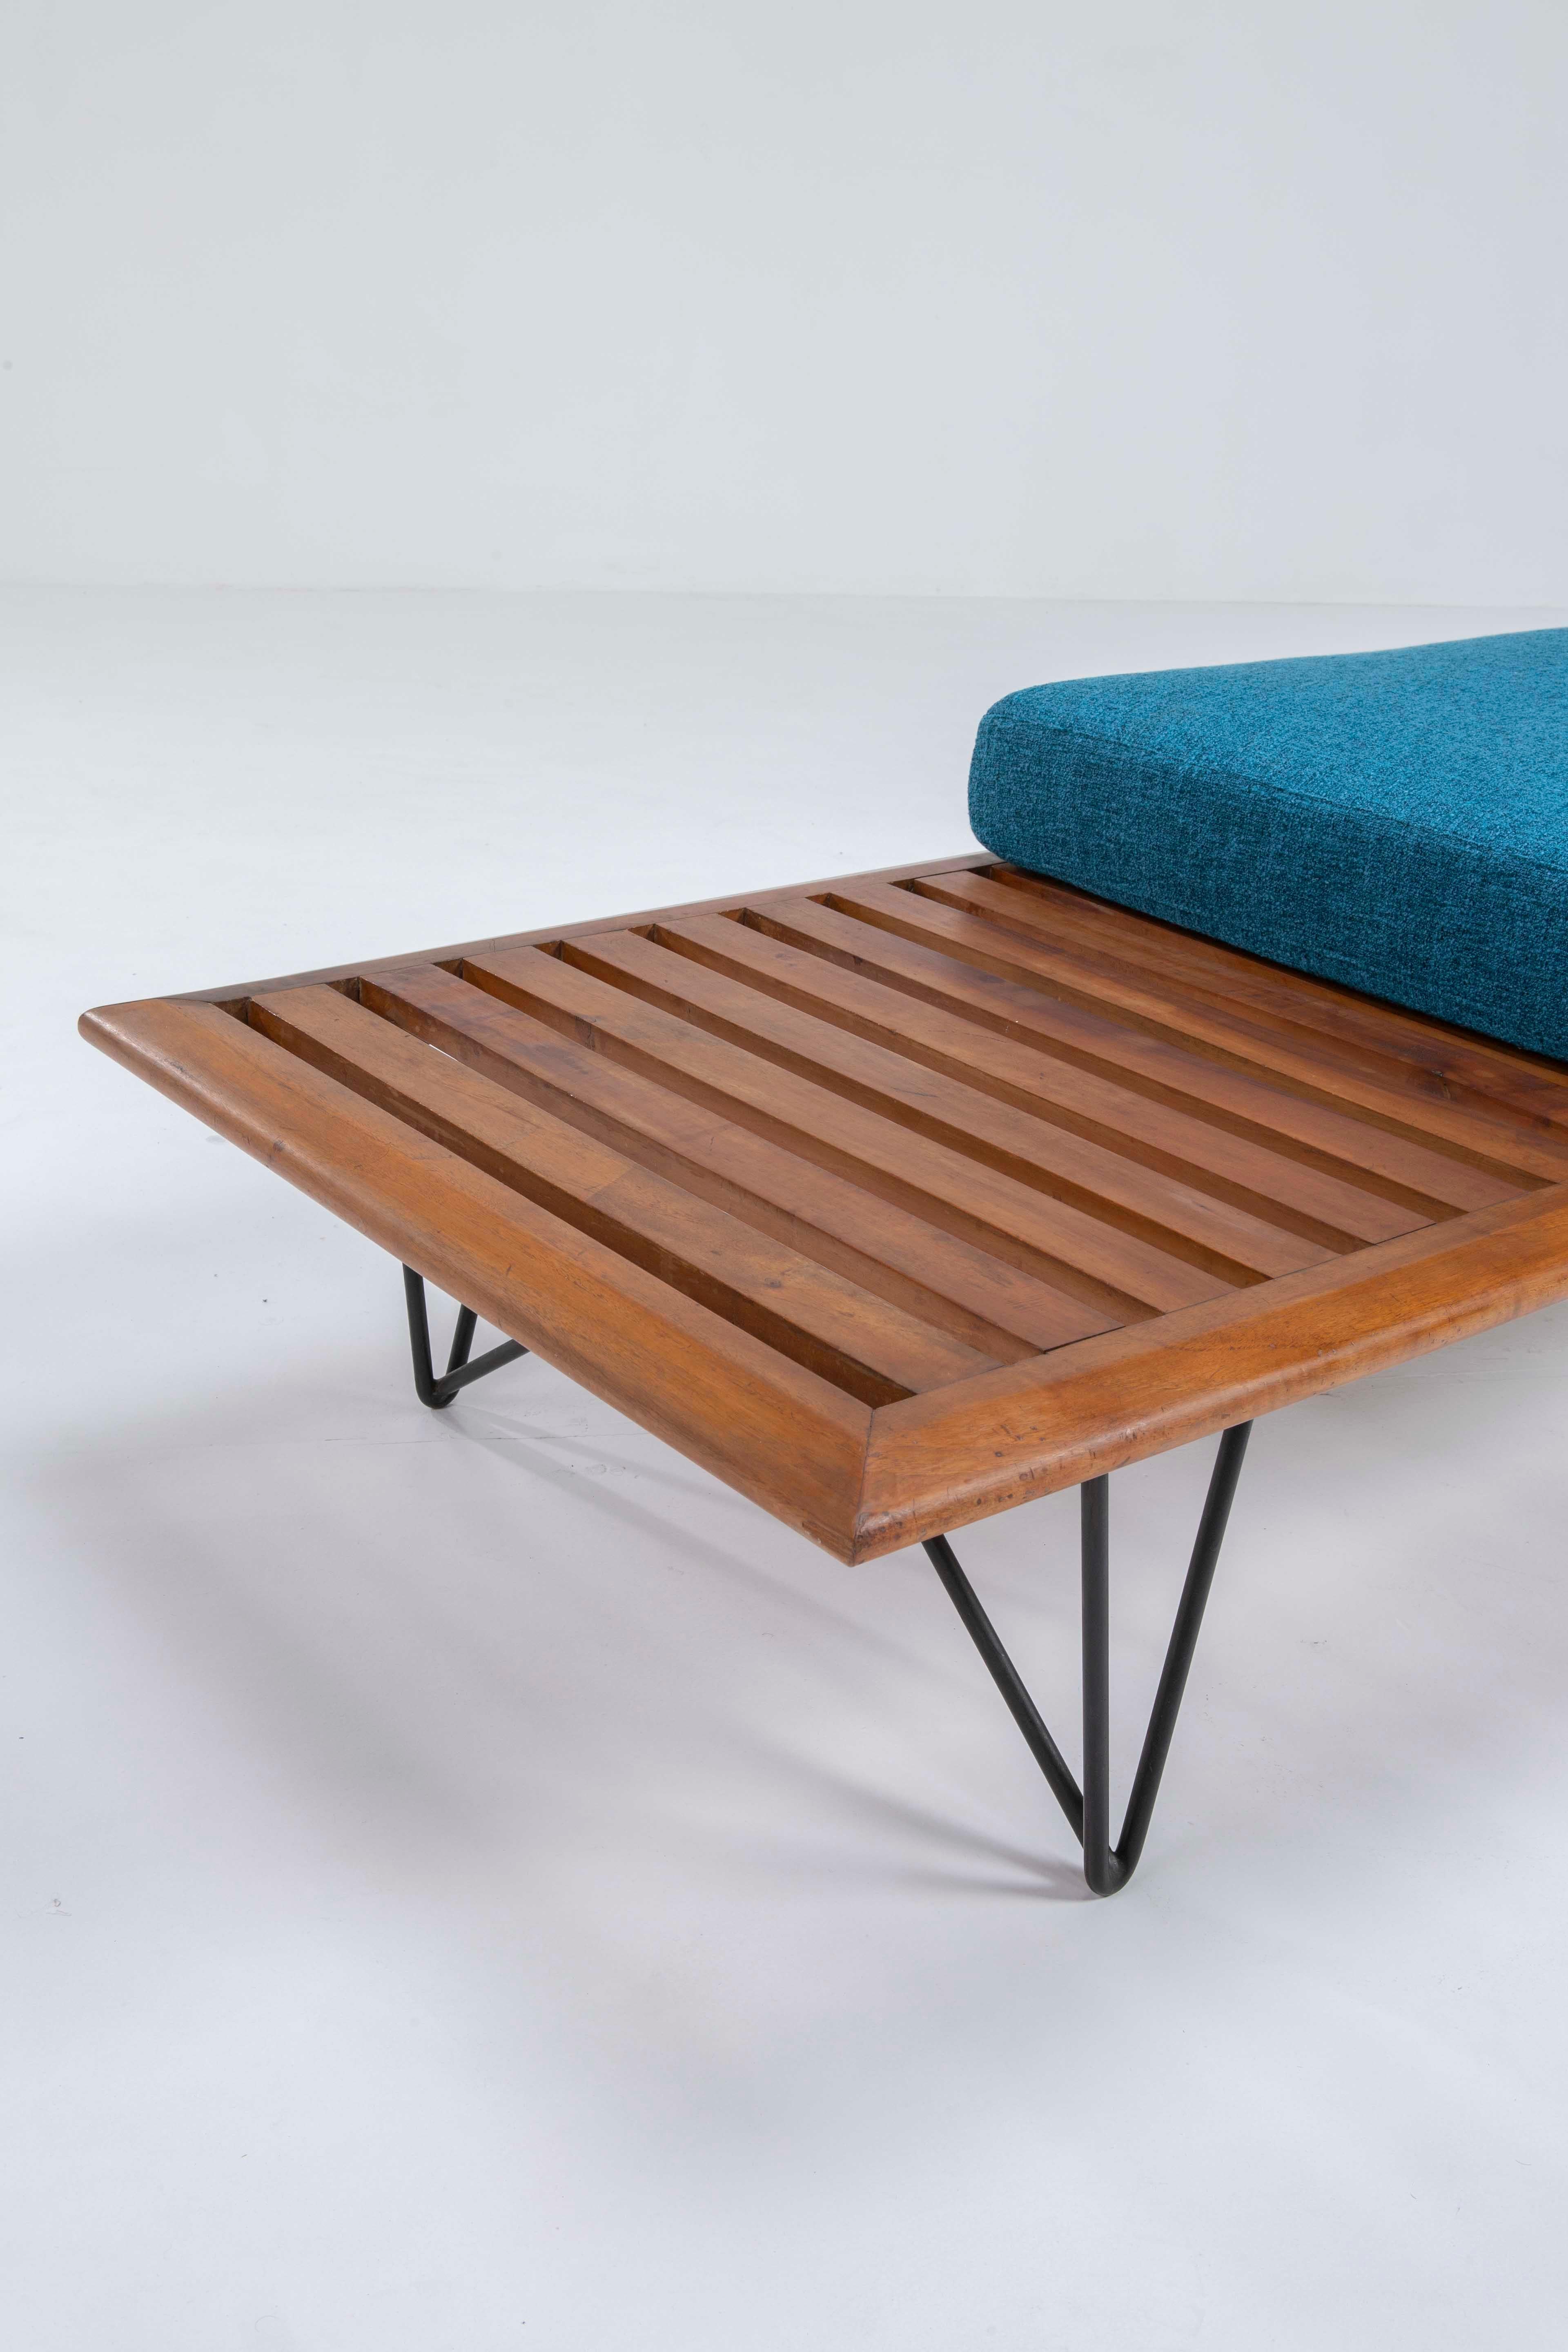 Carlo Hauner and Martin Eisler Rare bench - 1950s Italian Scandinavian Design 1